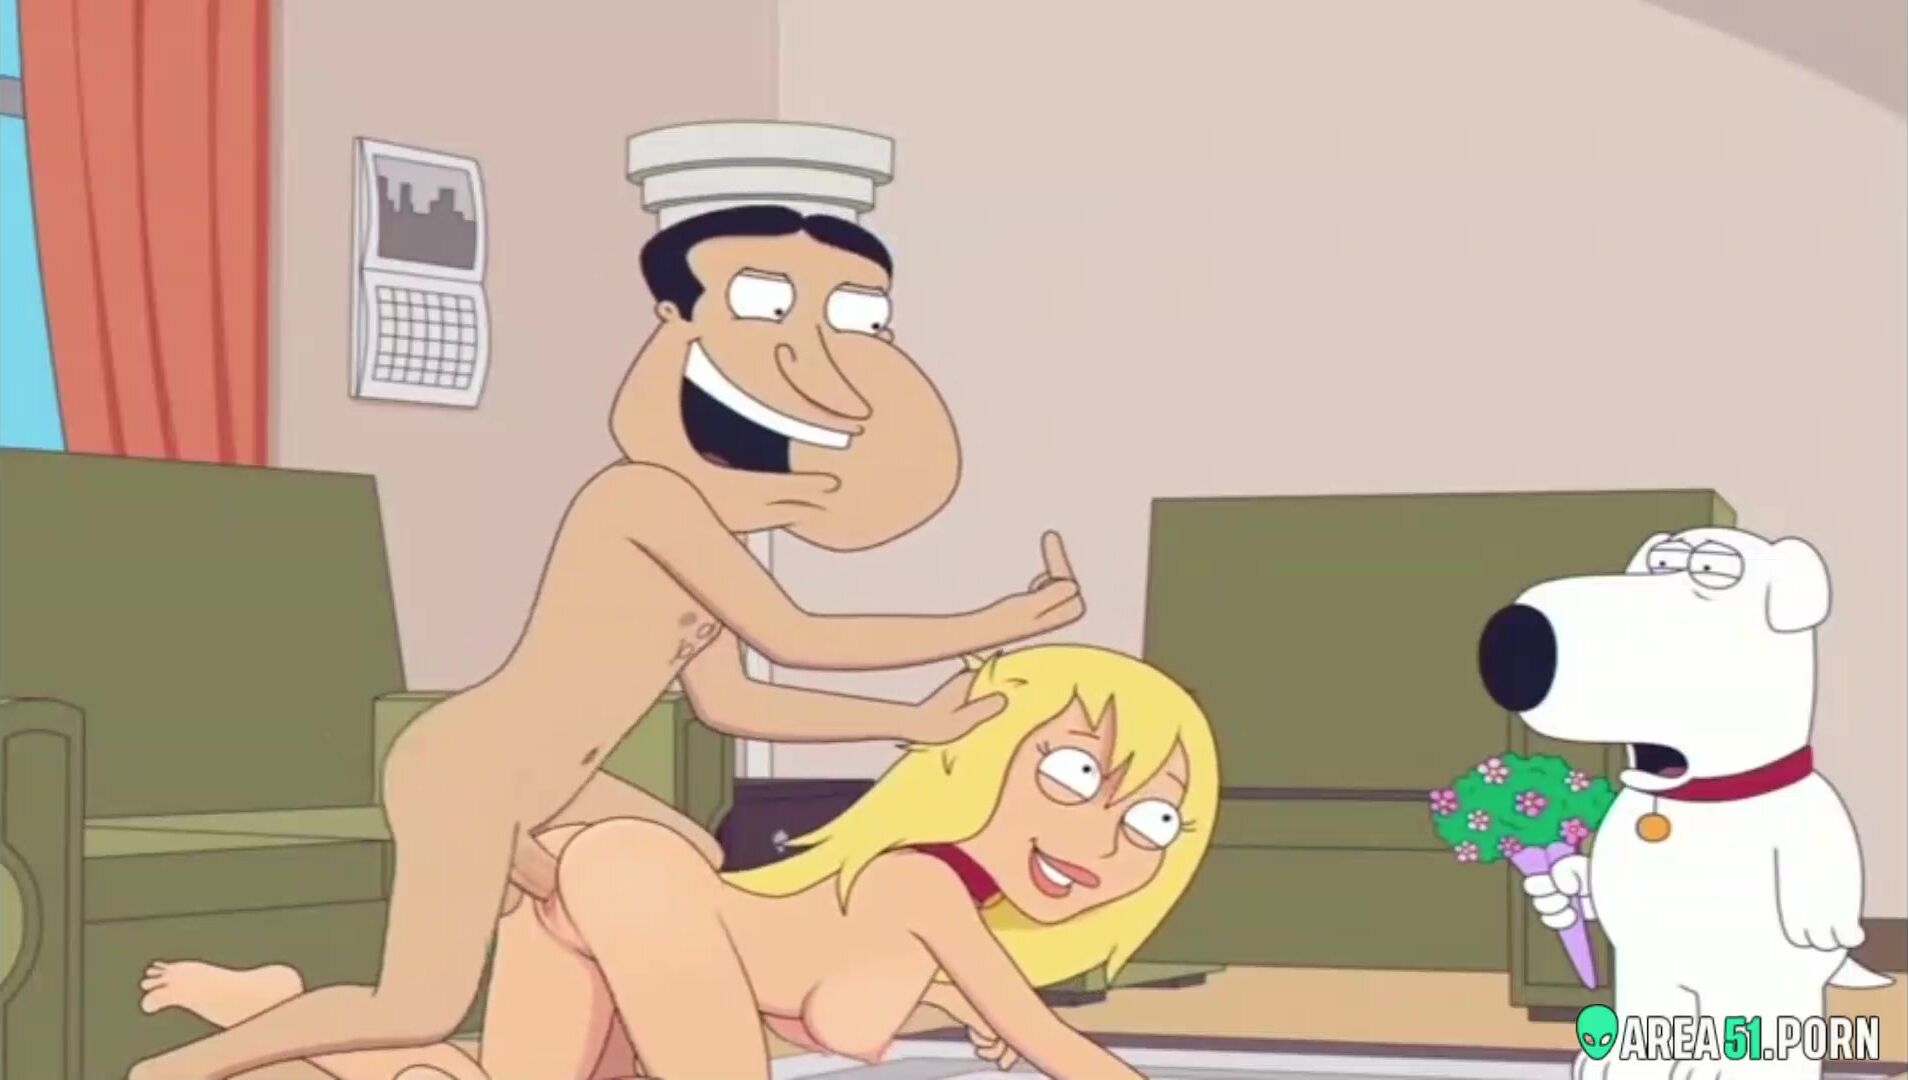 Quagmire Porn - 3D XXX cartoon, family guy! Brian's girlfriend fucked by Quagmire | AREA51. PORN